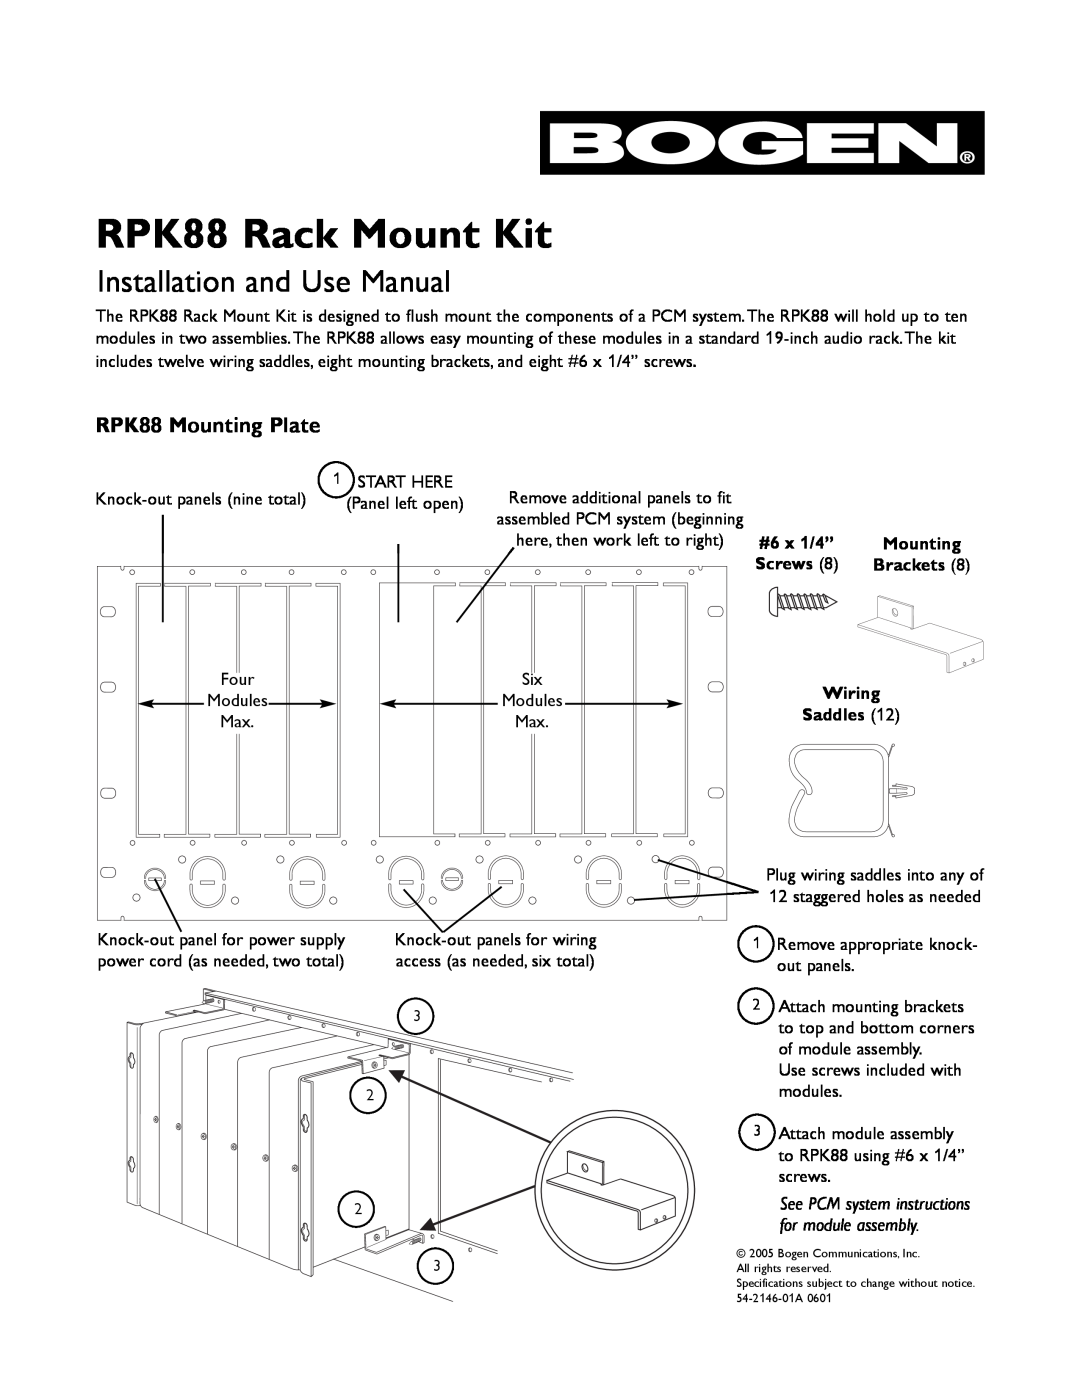 Bogen rpk88 specifications RPK88 Rack Mount Kit, Installation and Use Manual, RPK88 Mounting Plate, #6 x 1/4”, Screws 